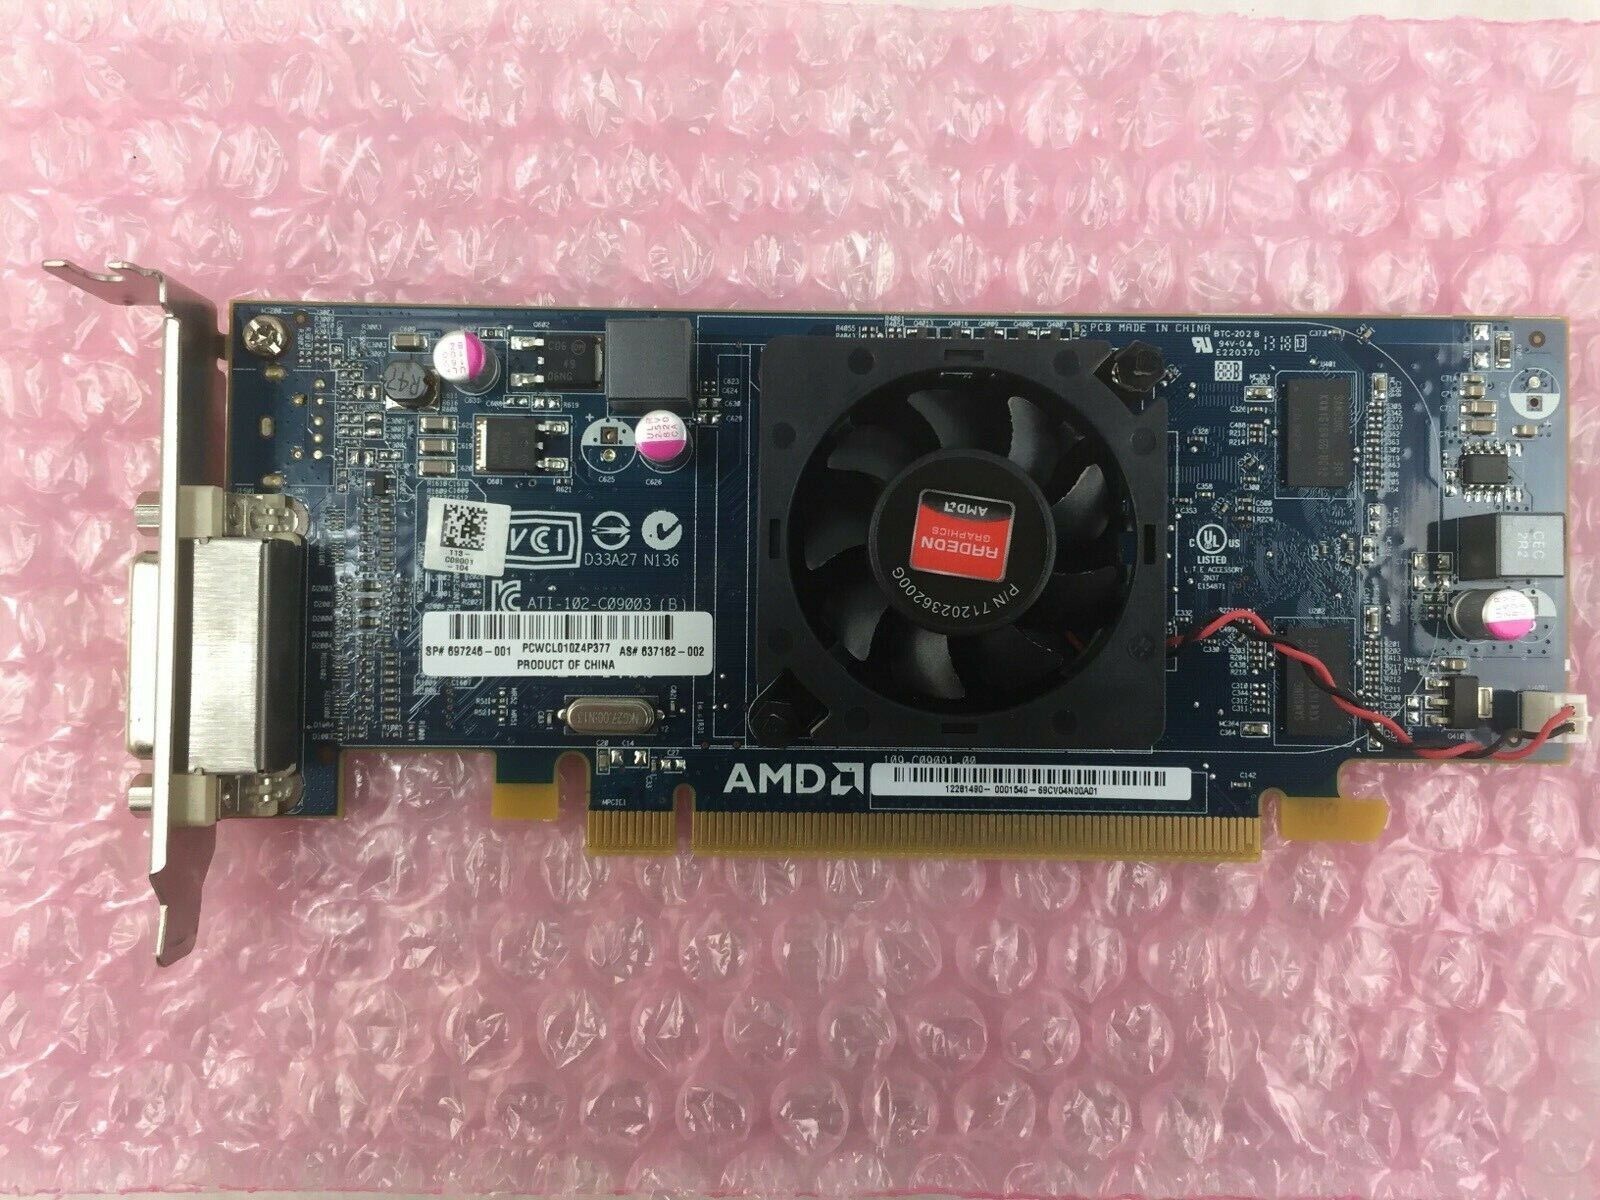 Dell AMD Radeon ATI-102-C09003 (B) 512MB PCI Express Video Card Low Profile